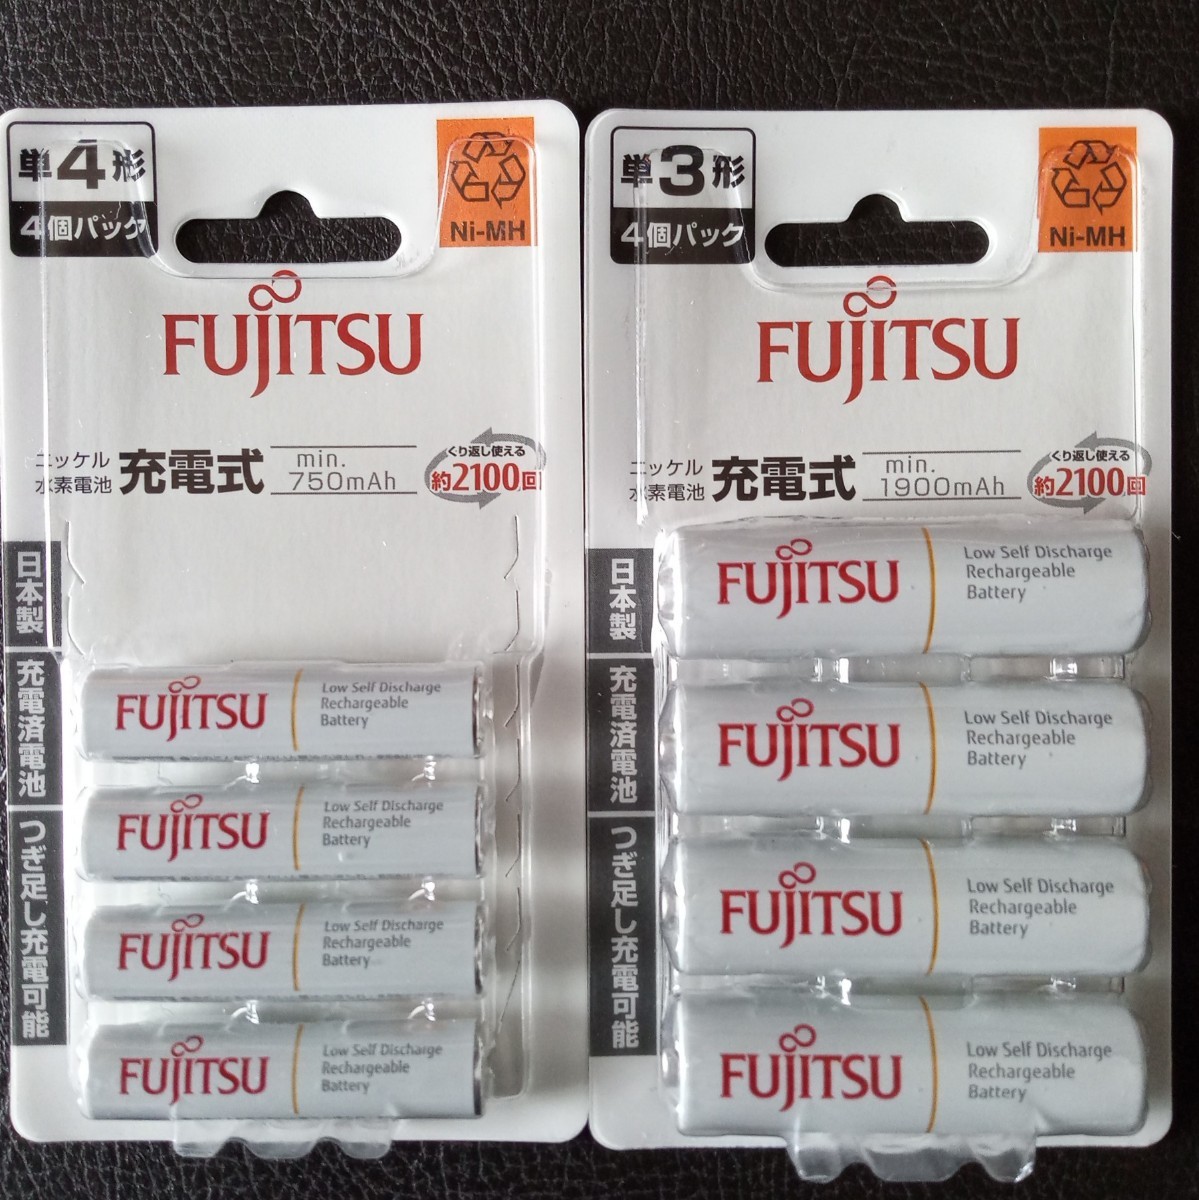  Fujitsu made in Japan nickel water element rechargeable battery 4 pcs set single 3/ single 4 shape each 1 total 2 pack set eneloop interchangeable HR-3UTC(4B) 4UTC(4B) single three single four FDK unopened new goods 